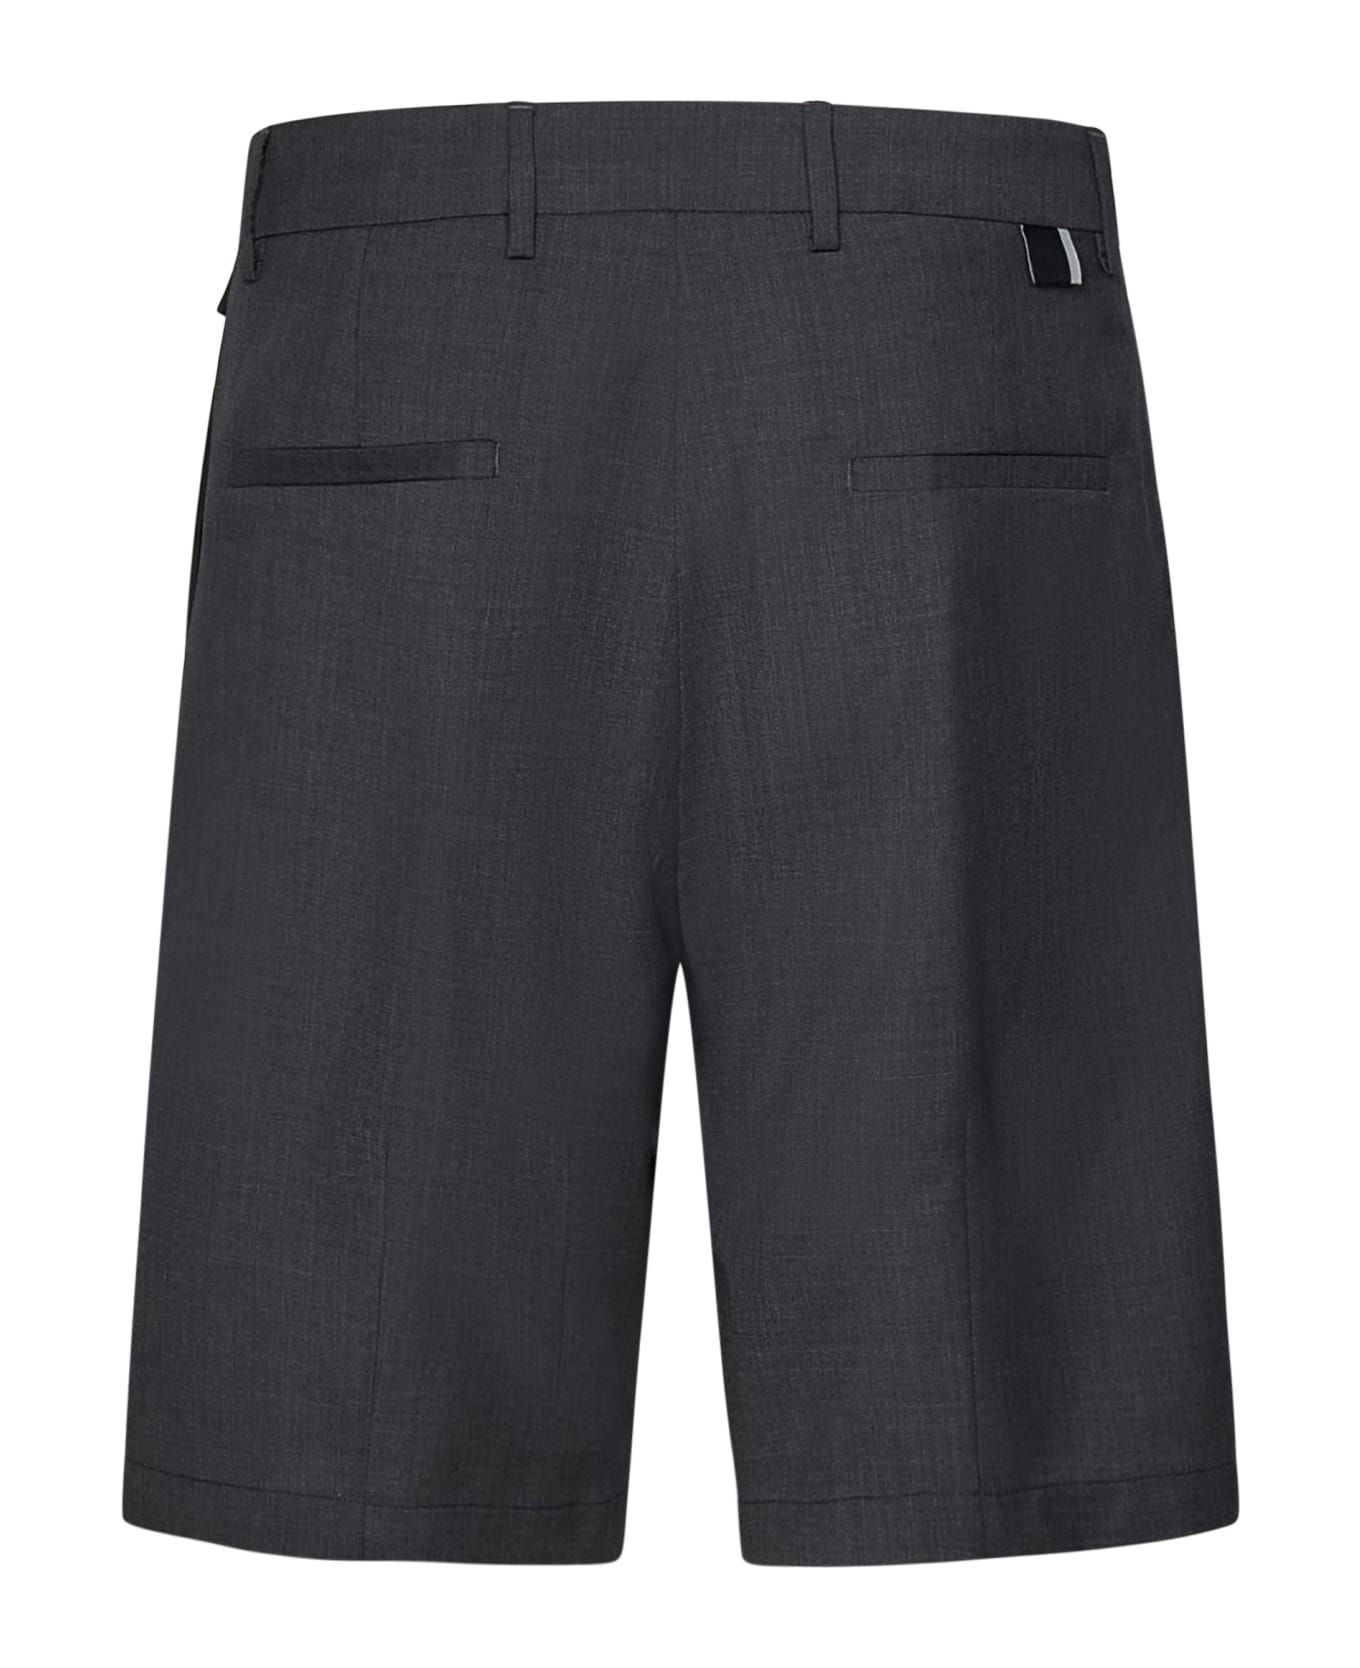 Low Brand Cooper Pocket Shorts - Grey